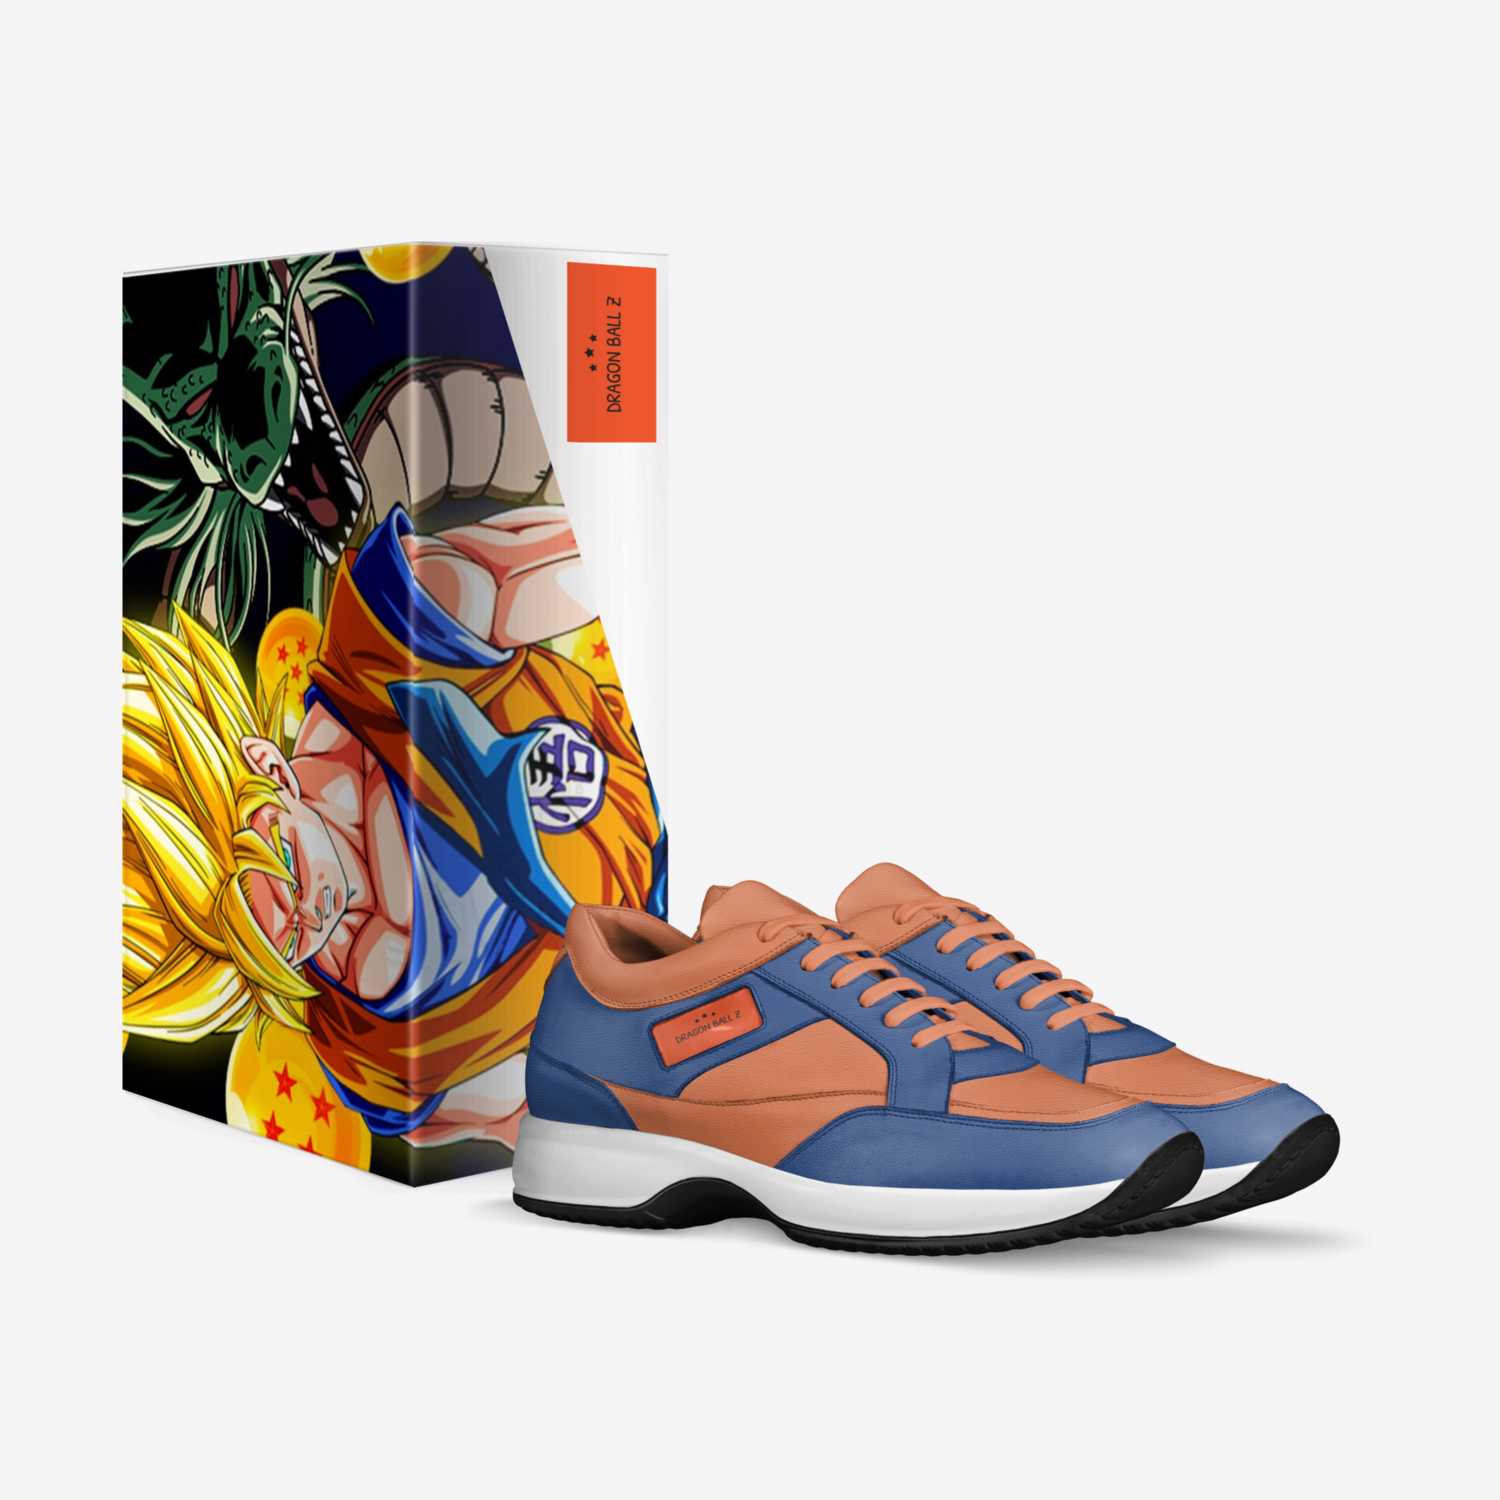 Dragon Ball Z custom made in Italy shoes by Jordan Wingate-jones | Box view